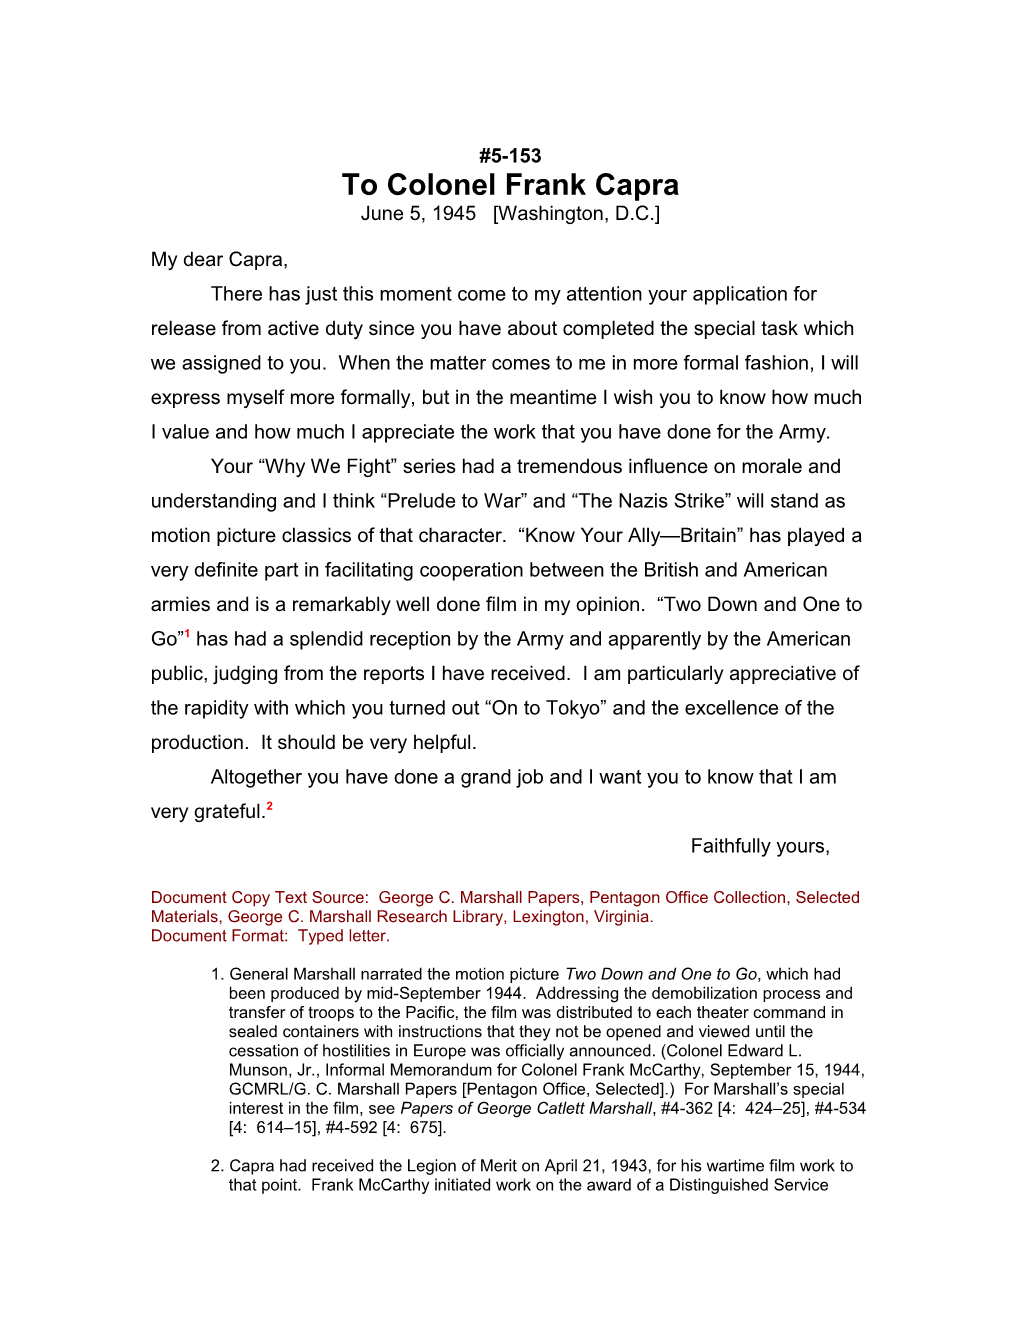 To Colonel Frank Capra